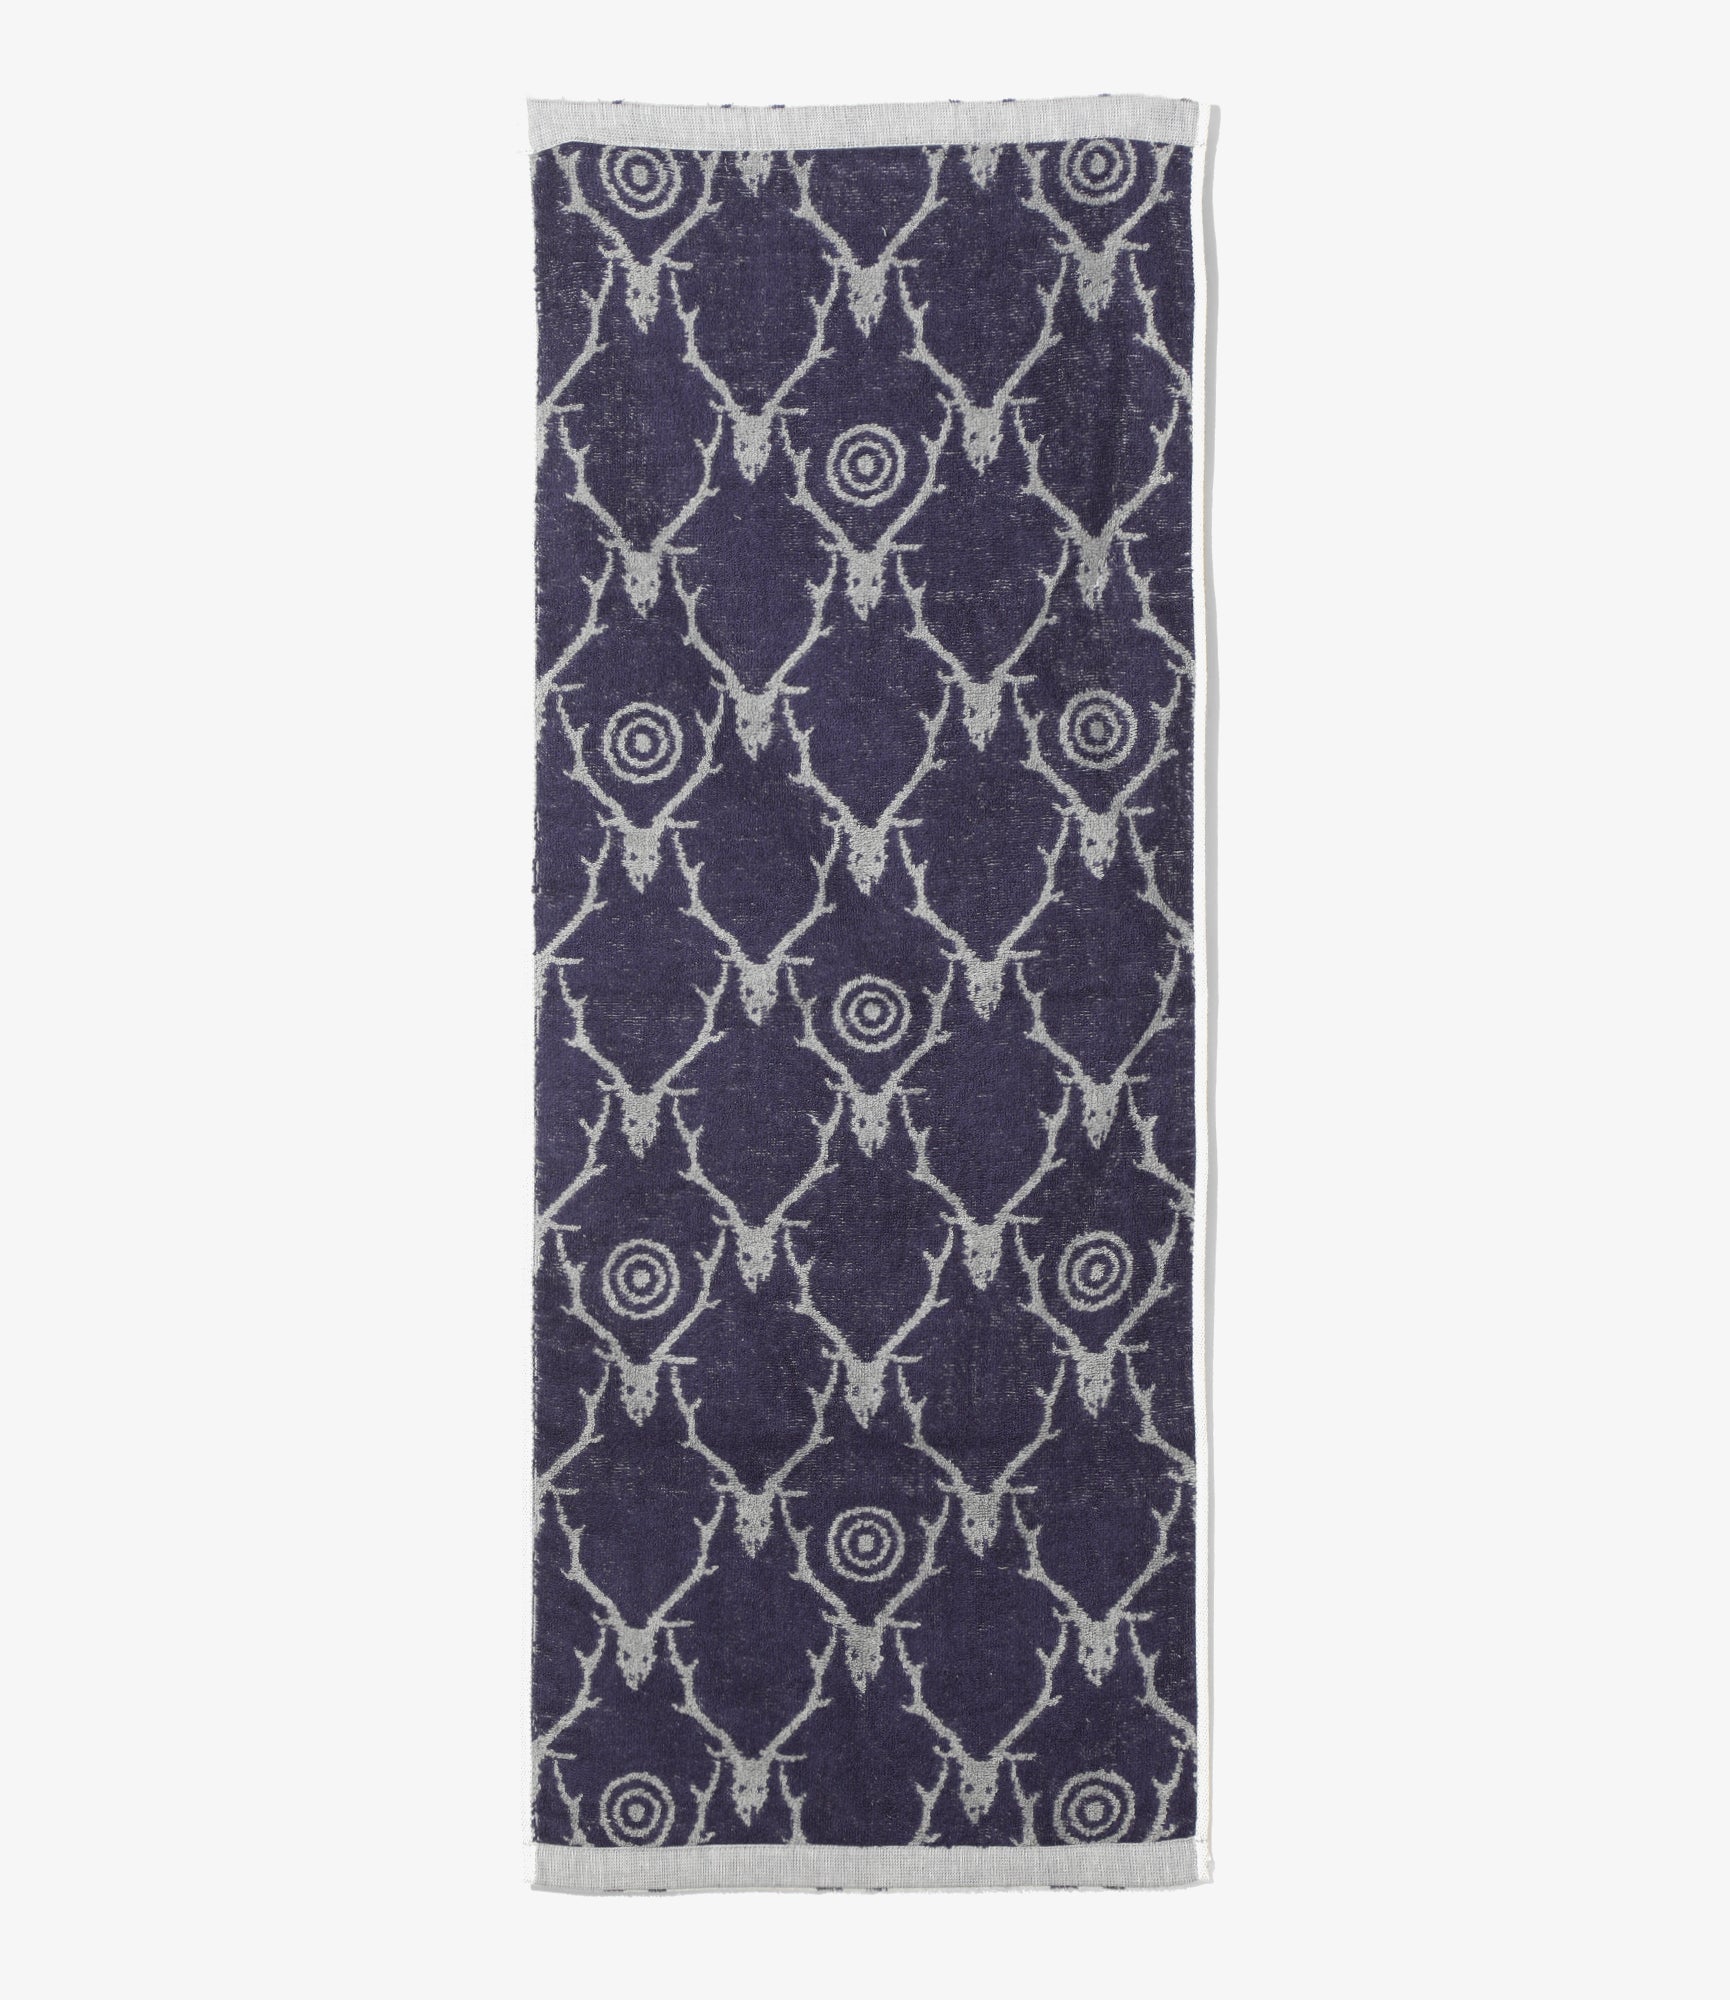 South2 West8 Face Towel - Cotton Pile Jq. / Skull&Target - Grey/Purple